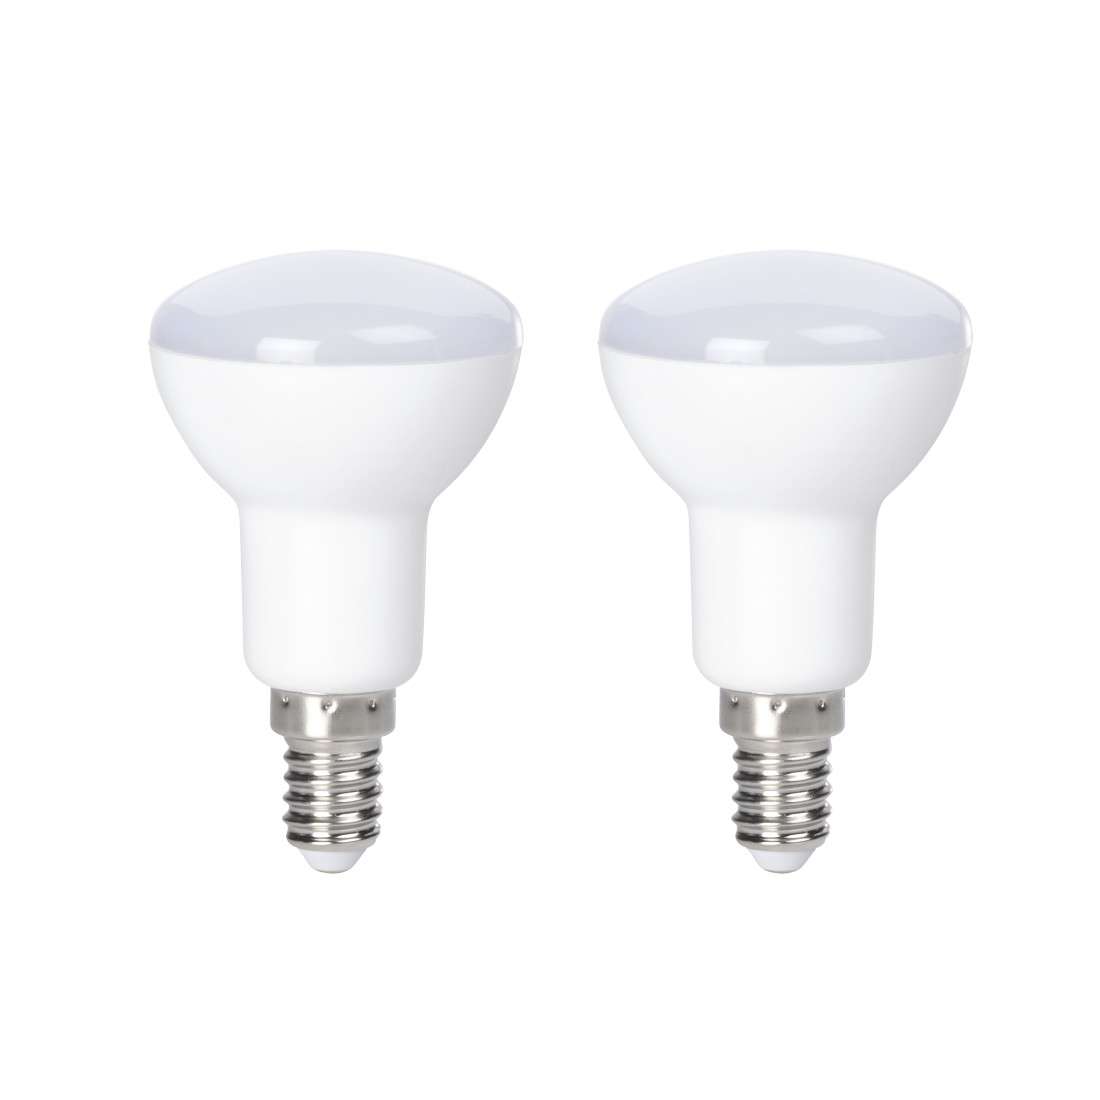 XAVAX LED-Lampe, E14, 470lm ersetzt 40W, Reflektorlampe R50, Warmweiß, 2 Stück